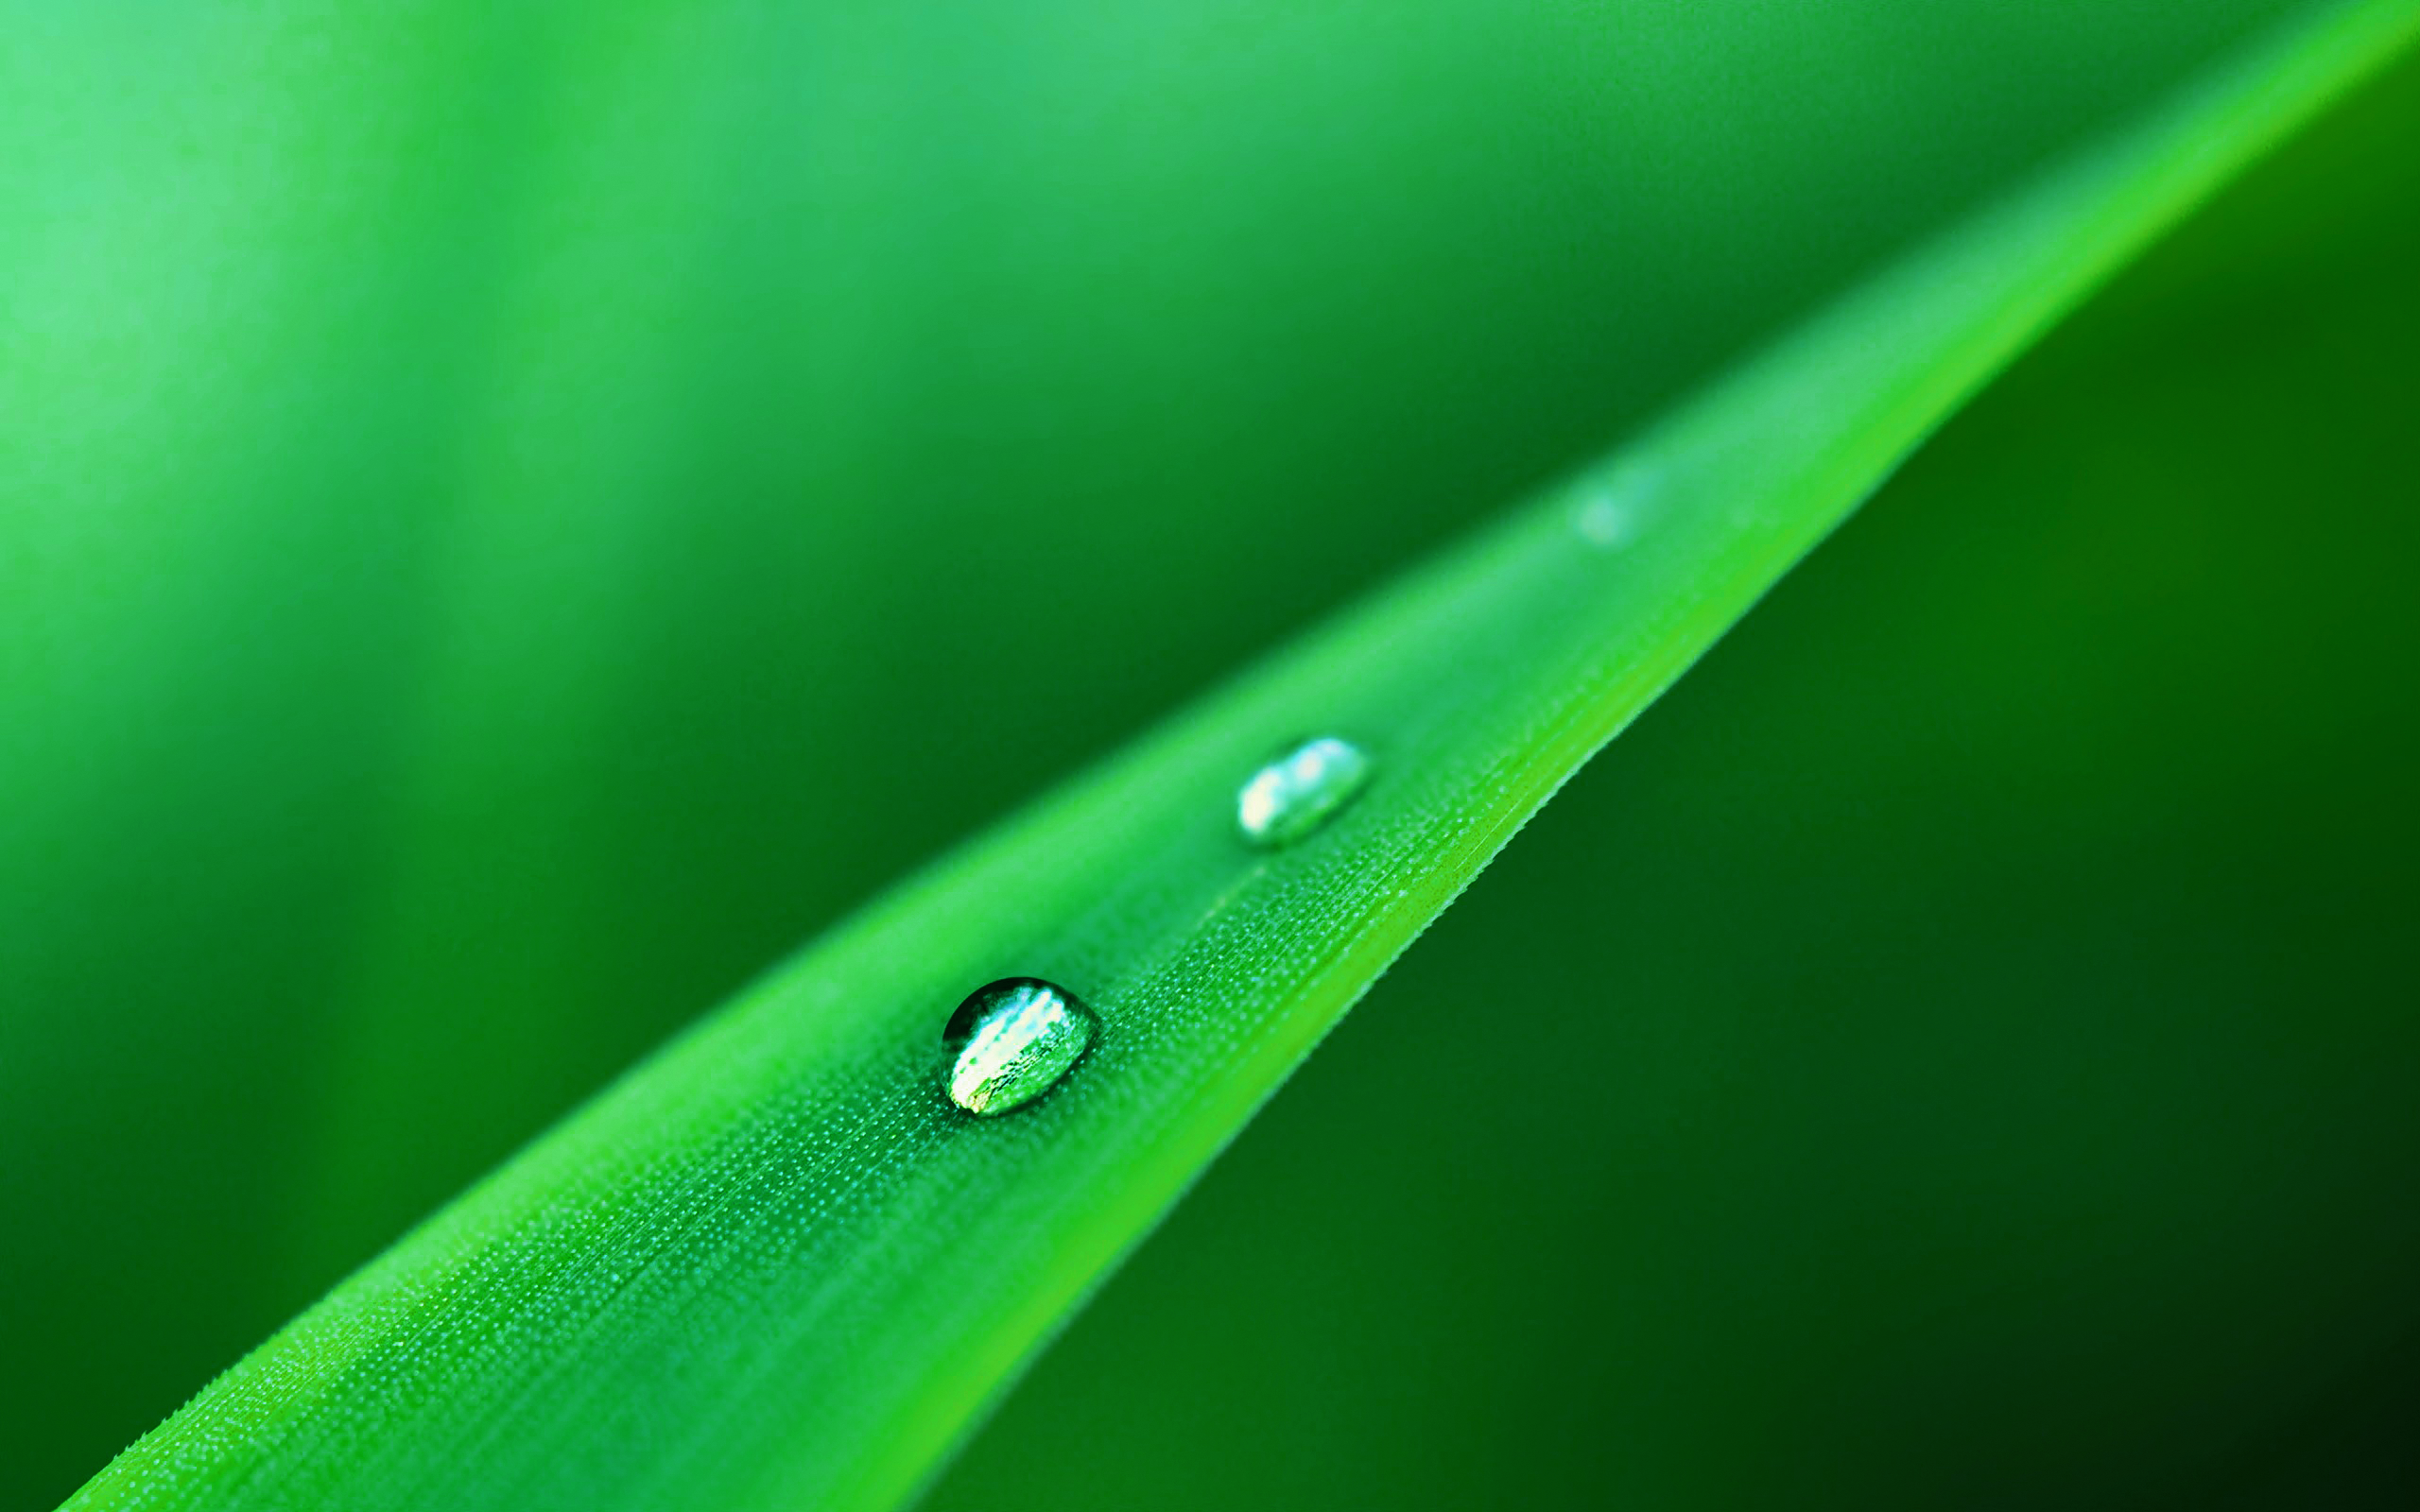 General 2560x1600 plants water drops leaves DeviantArt closeup macro